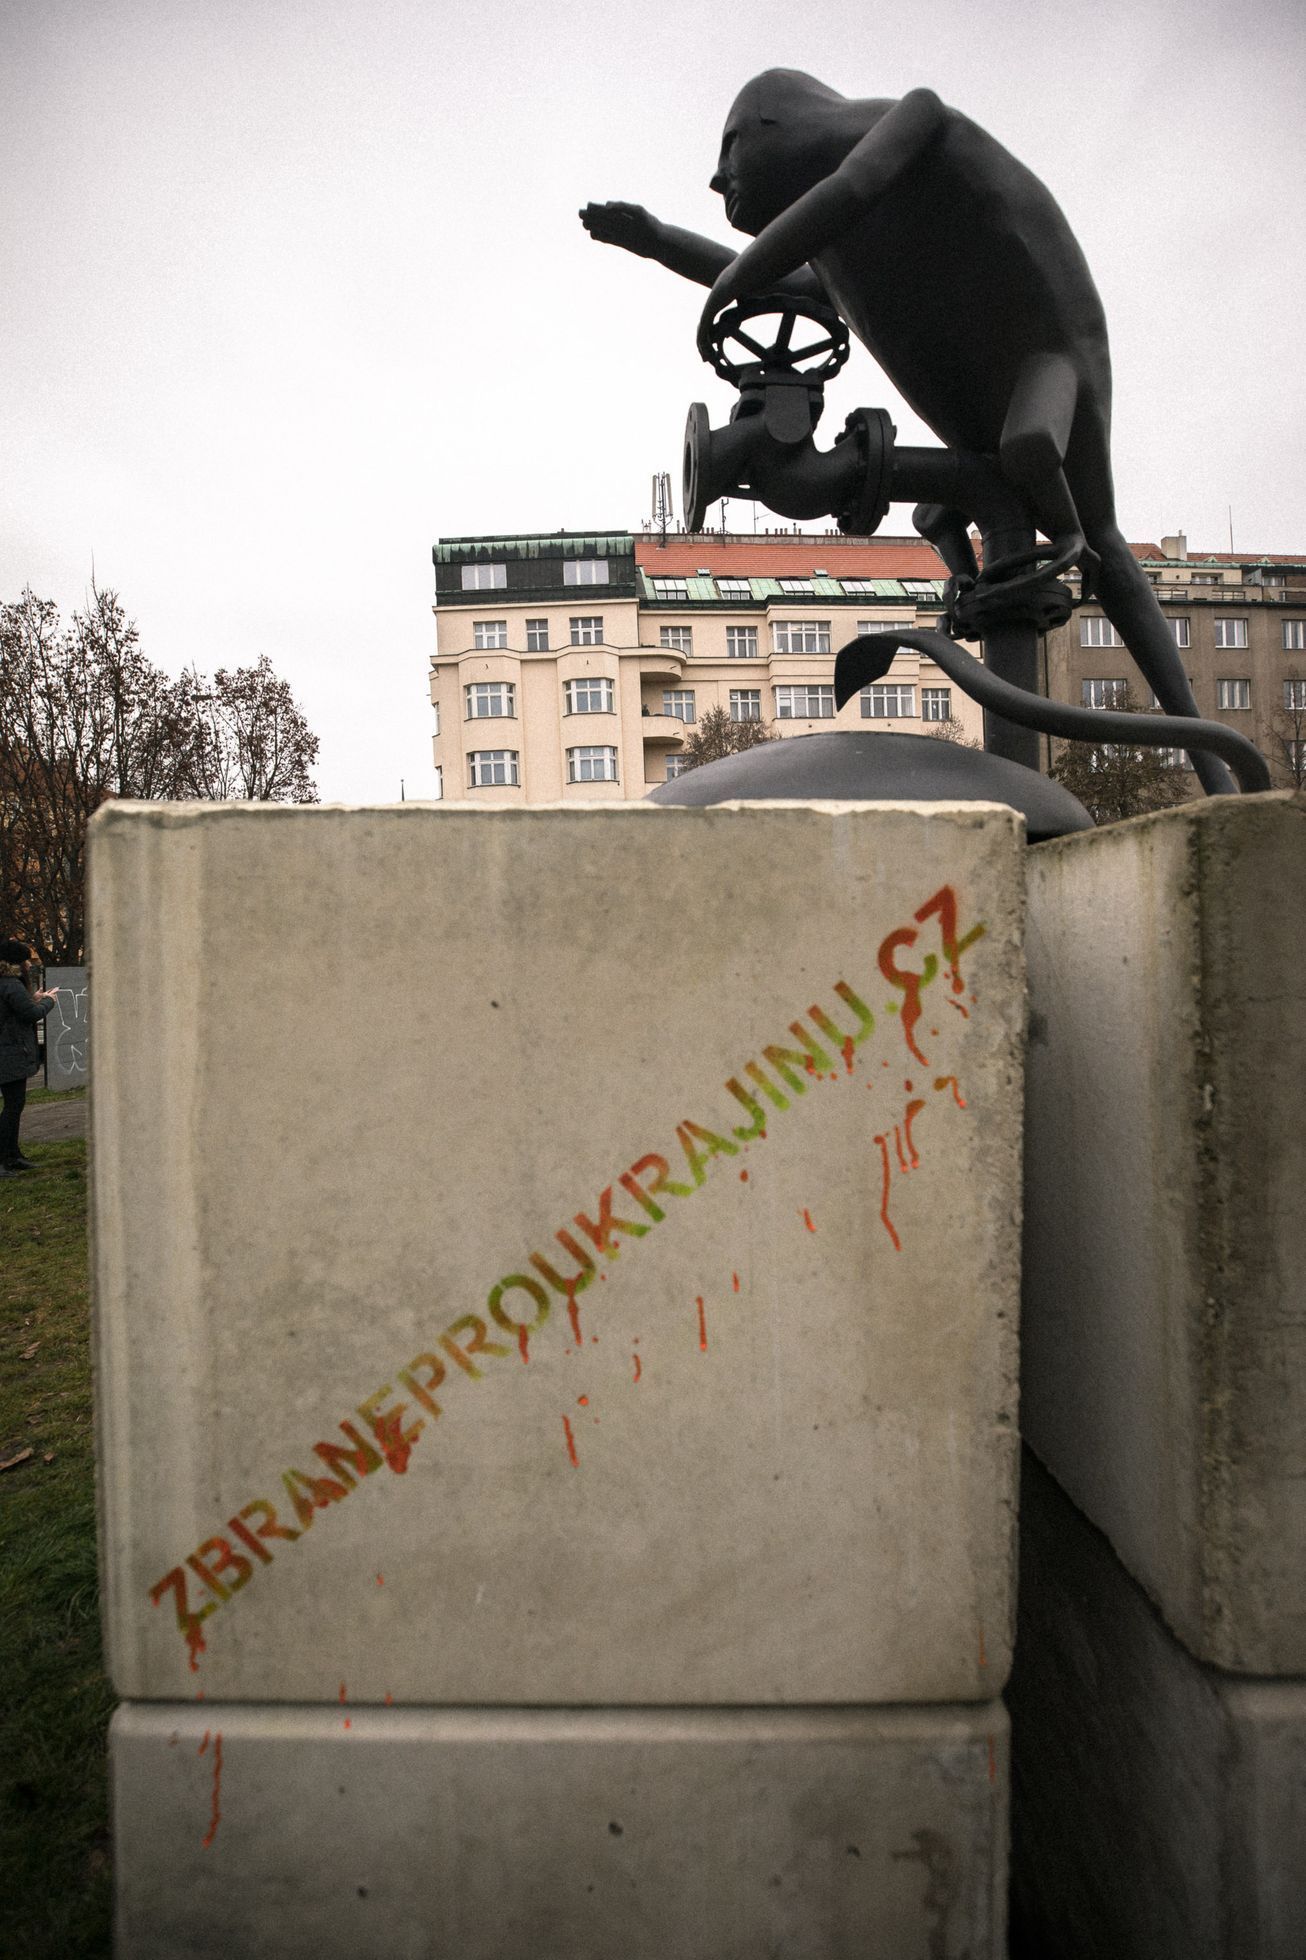 Socha Vladimira Putina jako skřeta na kohoutku s plynem místo sochy Koněva, Praha 6